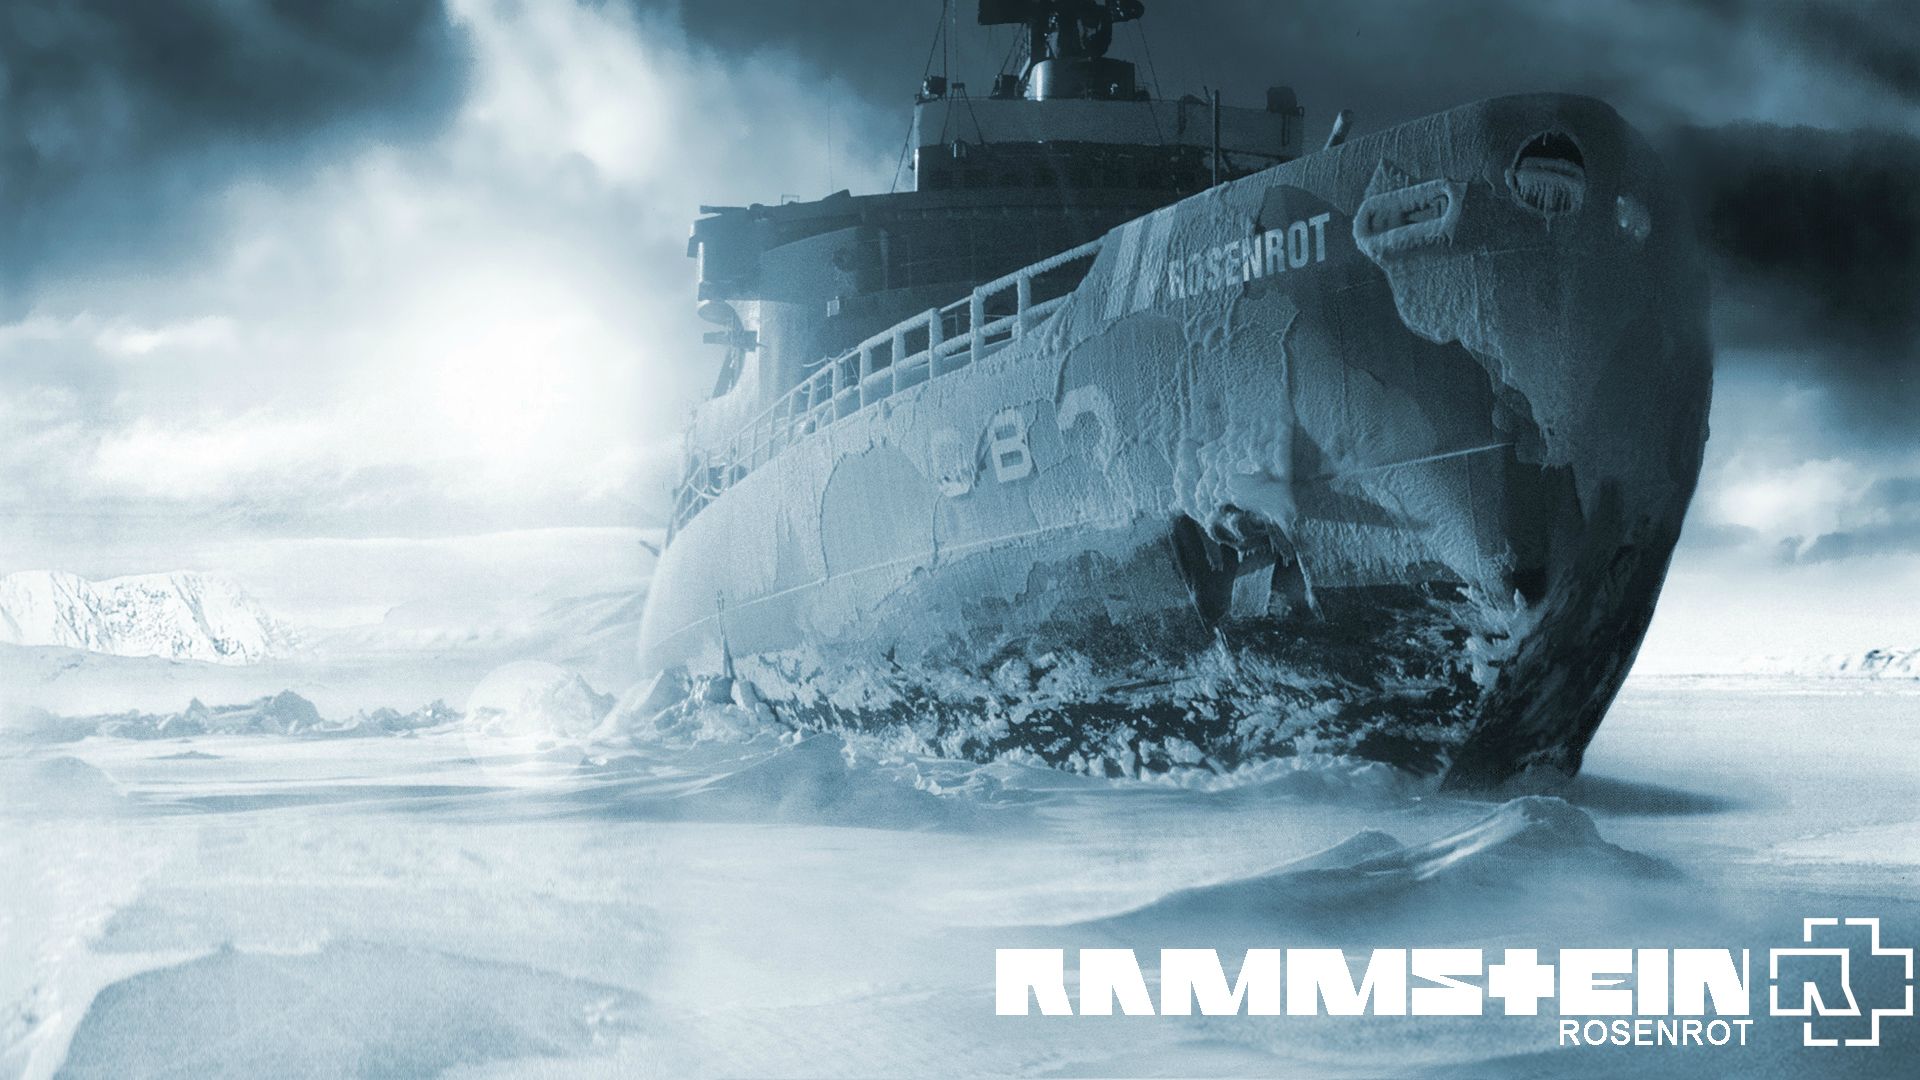 rammstein, germany, music, album, ice, ship, shipwreck 5K